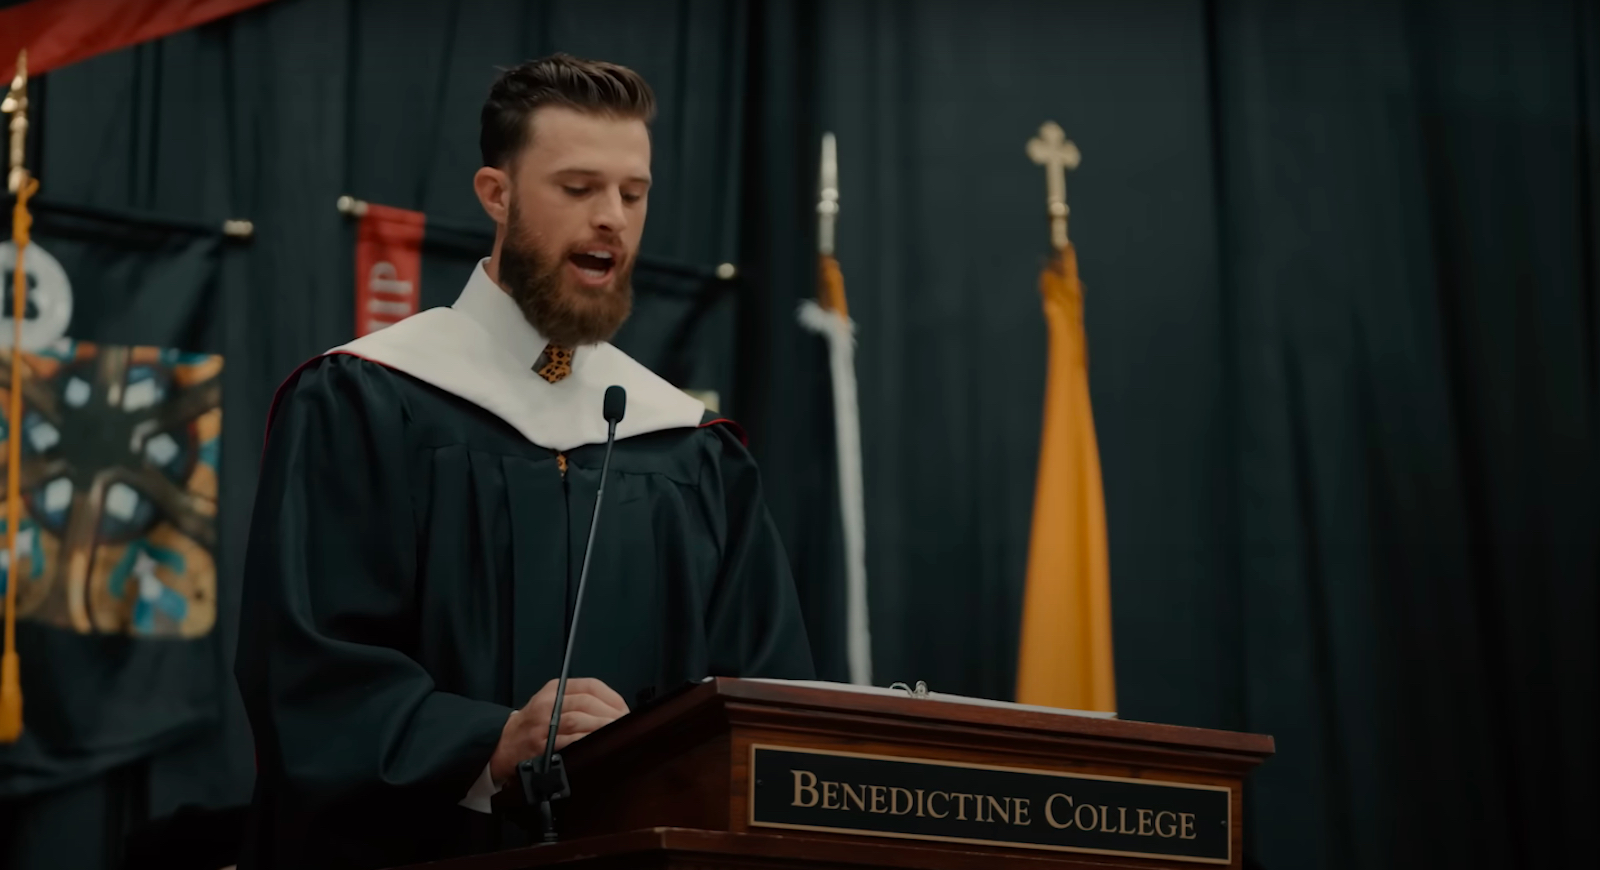 Harrison Butker delivers commencement speech at Benedictine College